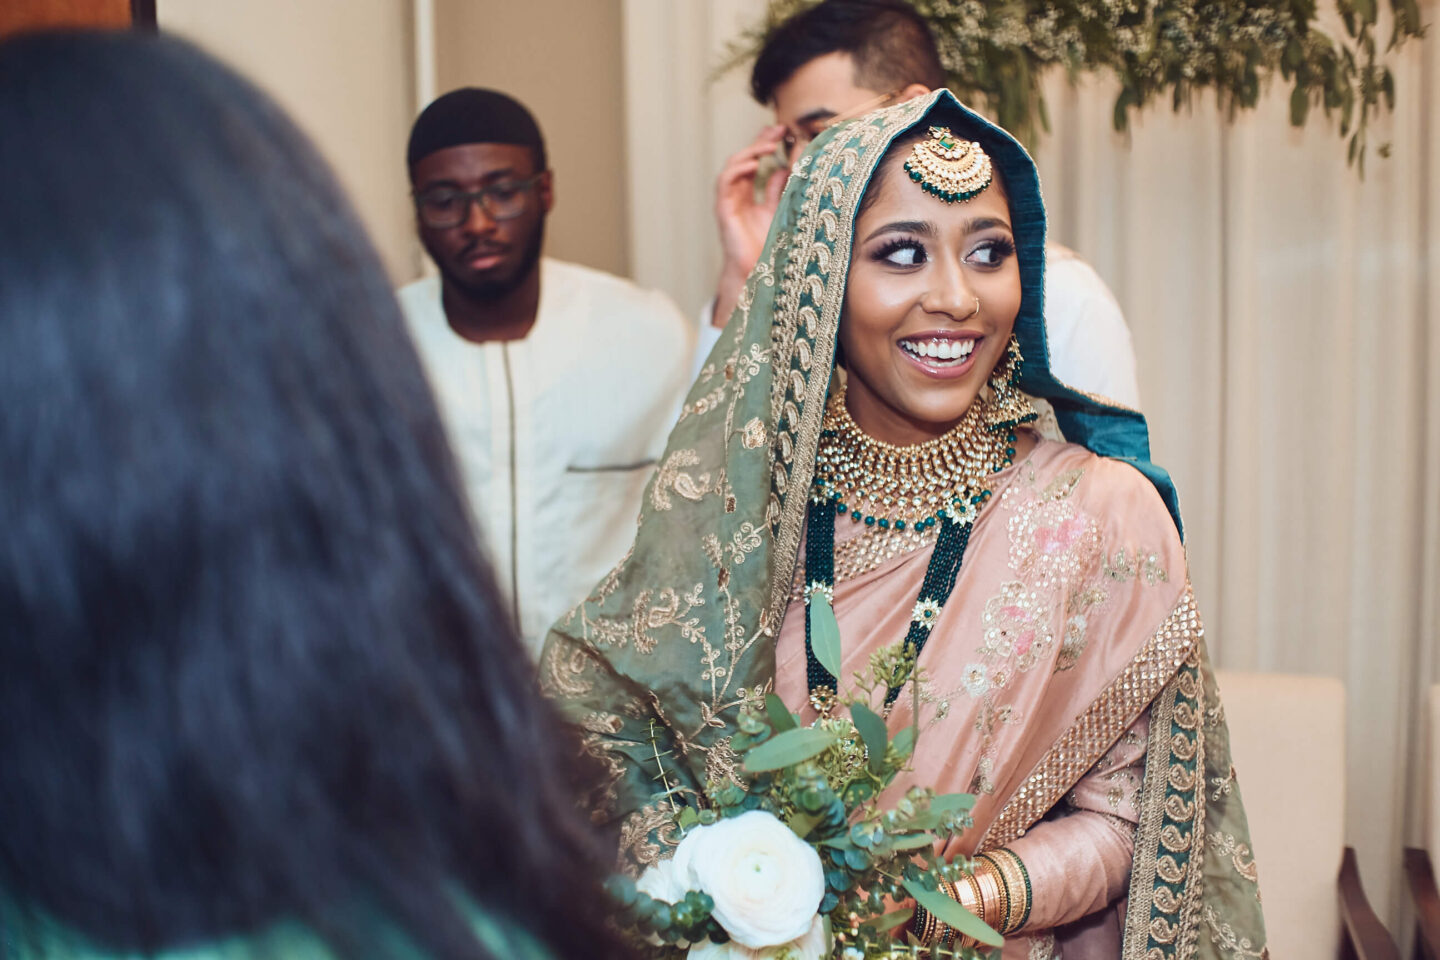 Eva and Humale - Nikkah Mubarak Wedding Ceremony - Event Photography - Wedding Photography - Queens, New York